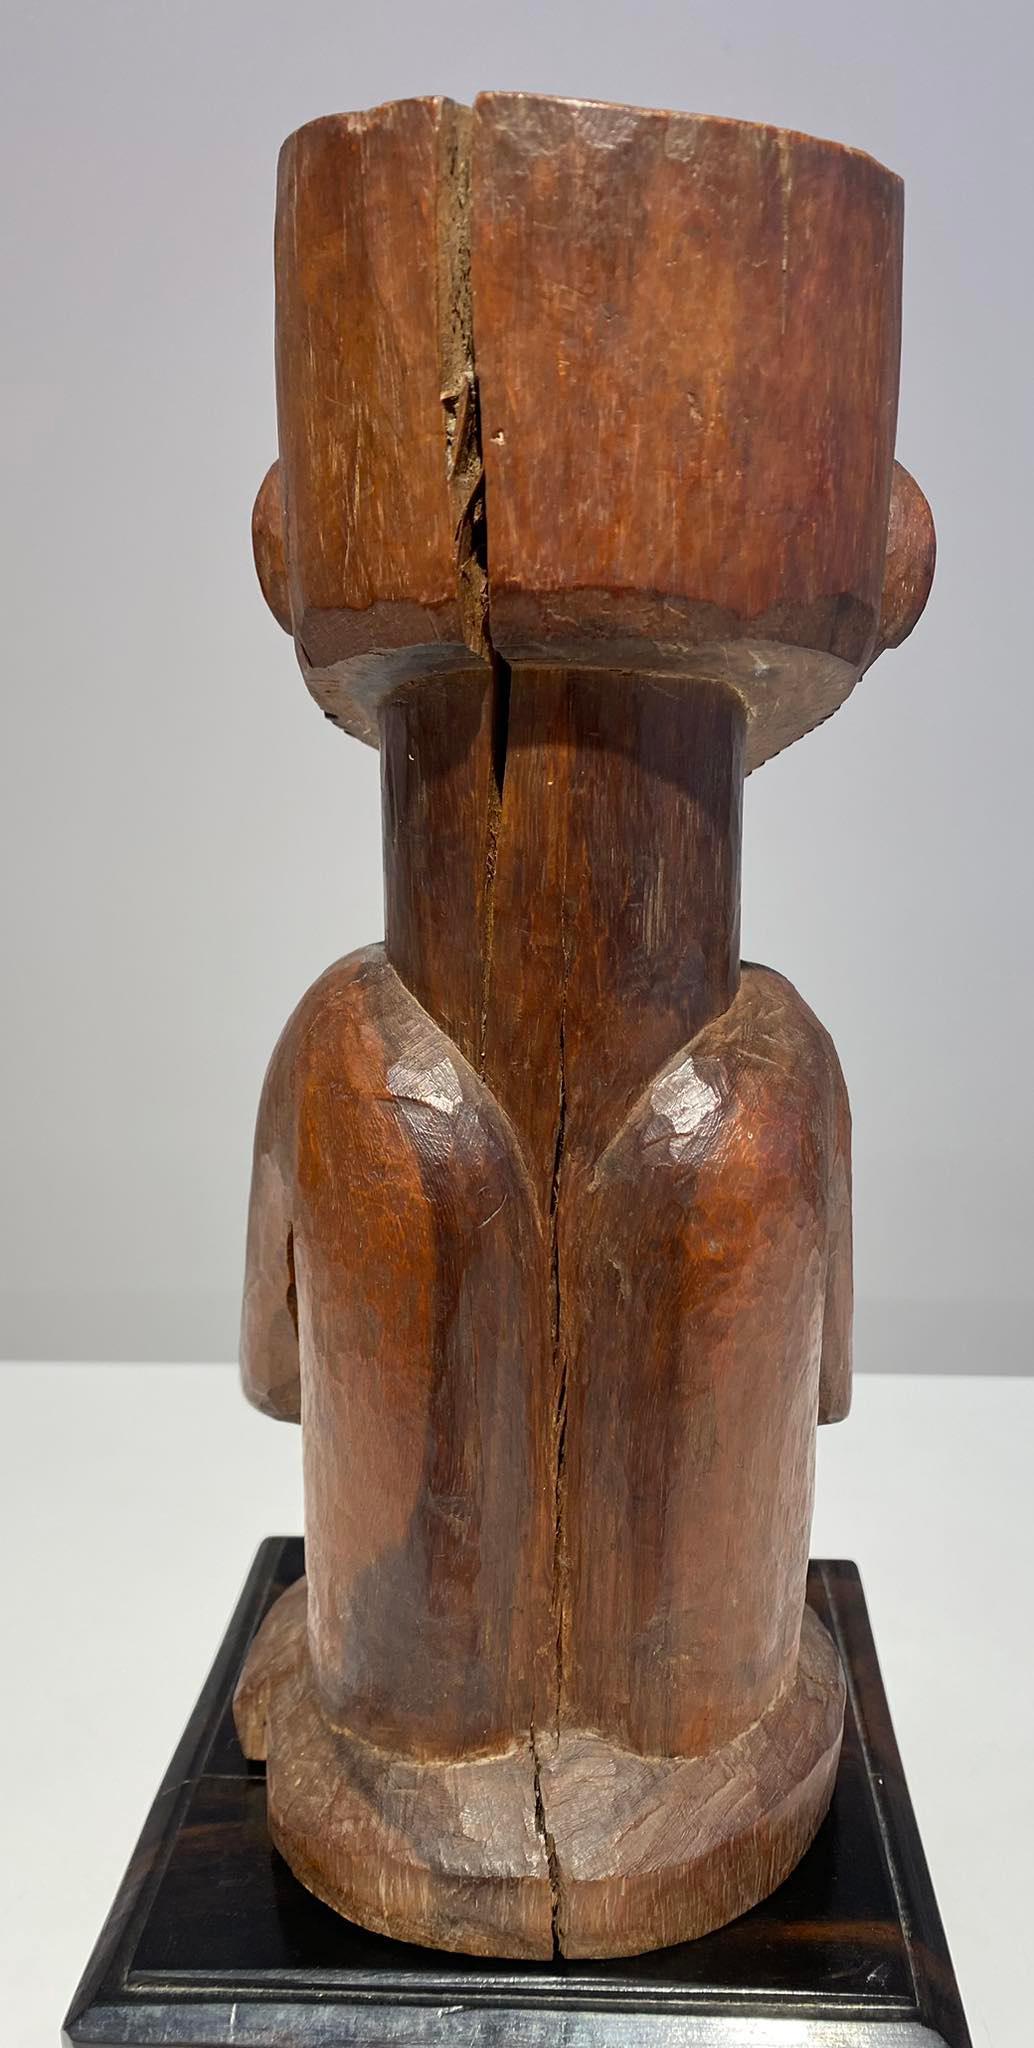 Kusu wooden ancestor fetish ca 1900 DR Congo Africa Central African Tribal Art For Sale 3